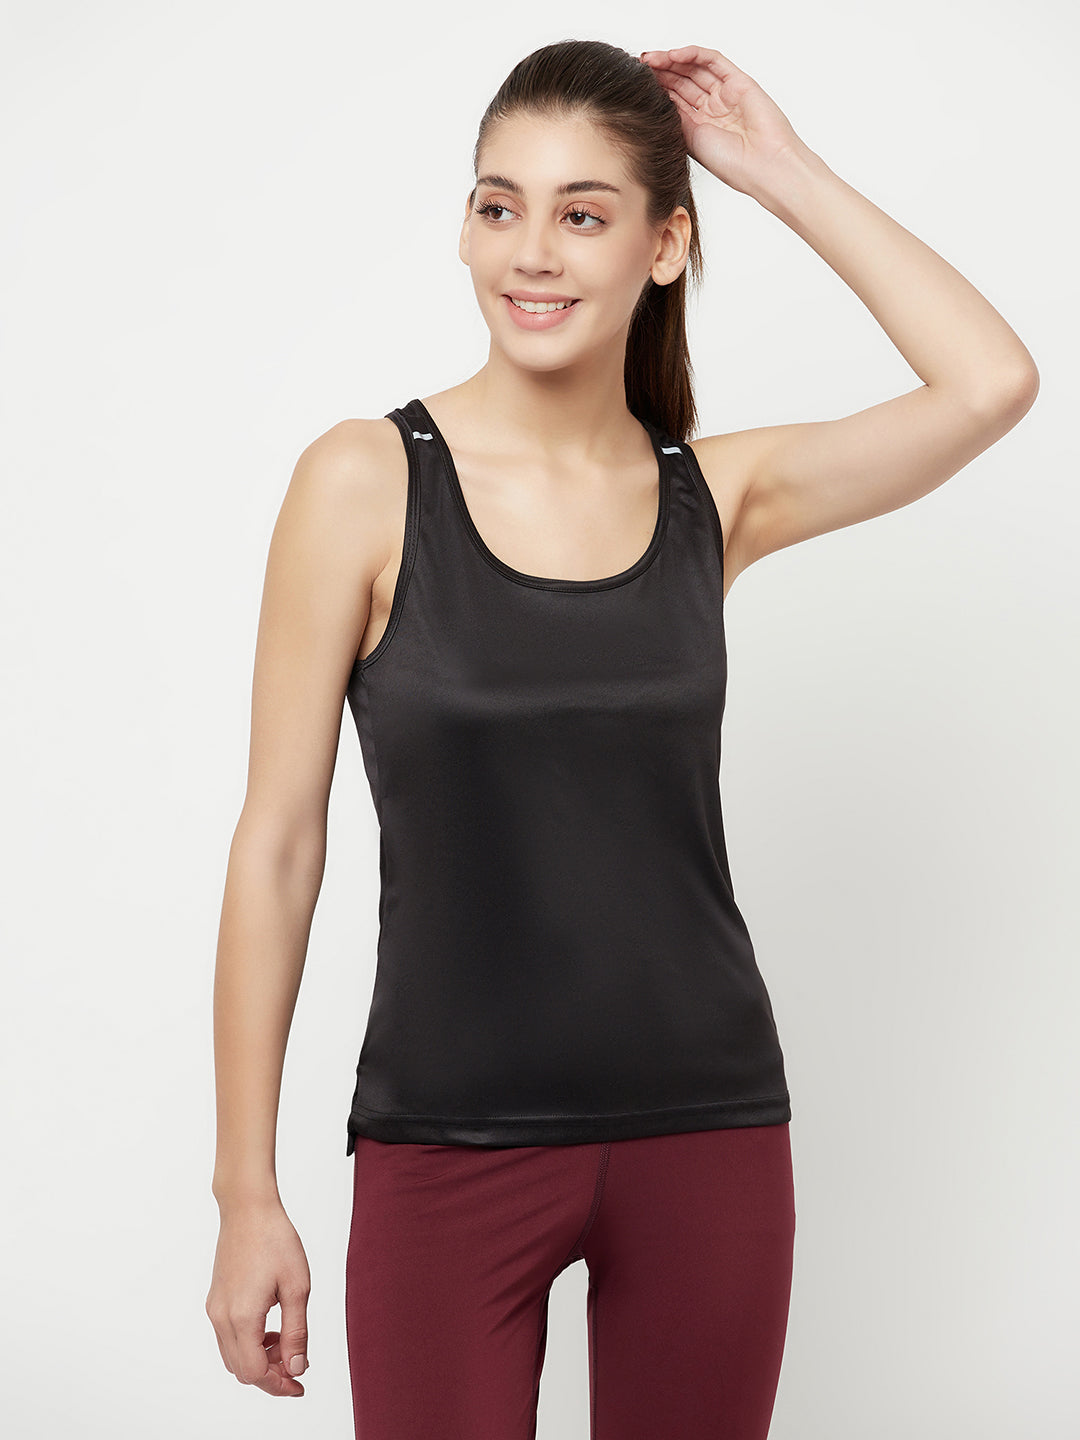 NKOOGH Thermal Undershirt for Women Cropped Exercise Top Ladies Halter  Gradient Print Off Shoulder Loose Lightweight Top 